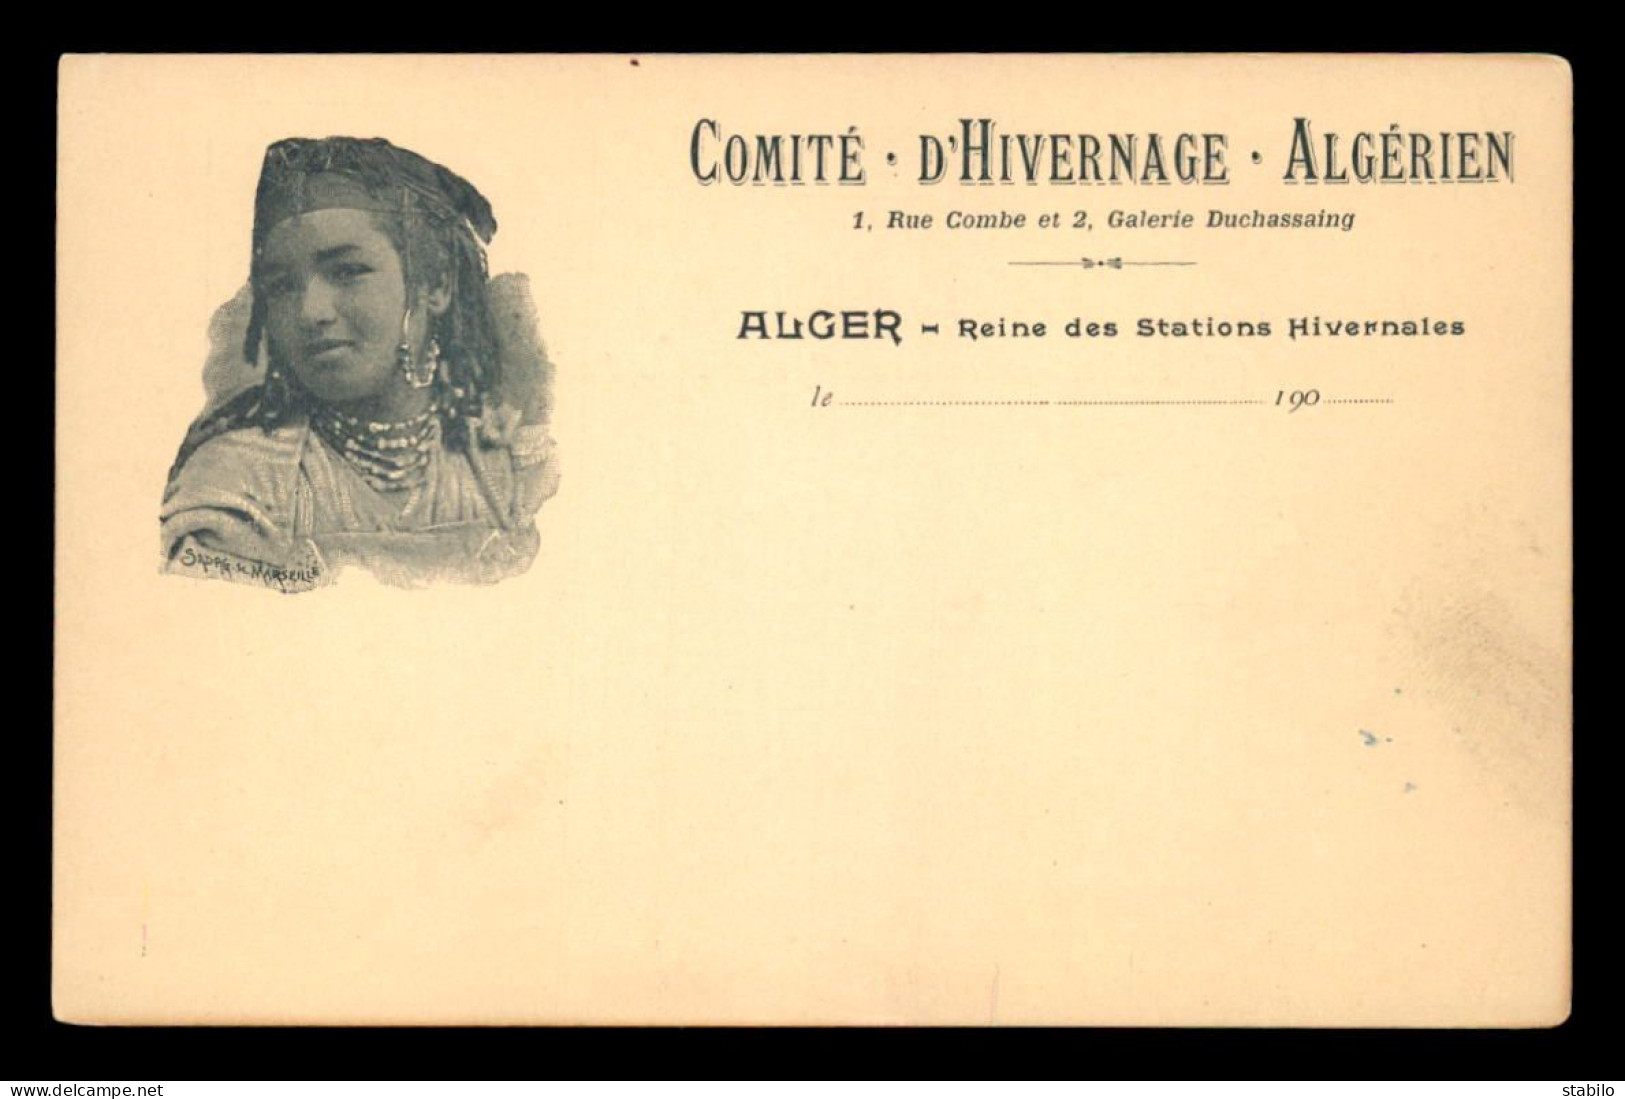 ALGERIE - ALGER - FEMME MAURESQUE - COMITE D'HIVERNAGE ALGERIEN, 1 RUE COMBE ET 2 GALERIE DUCHASSAING - Alger